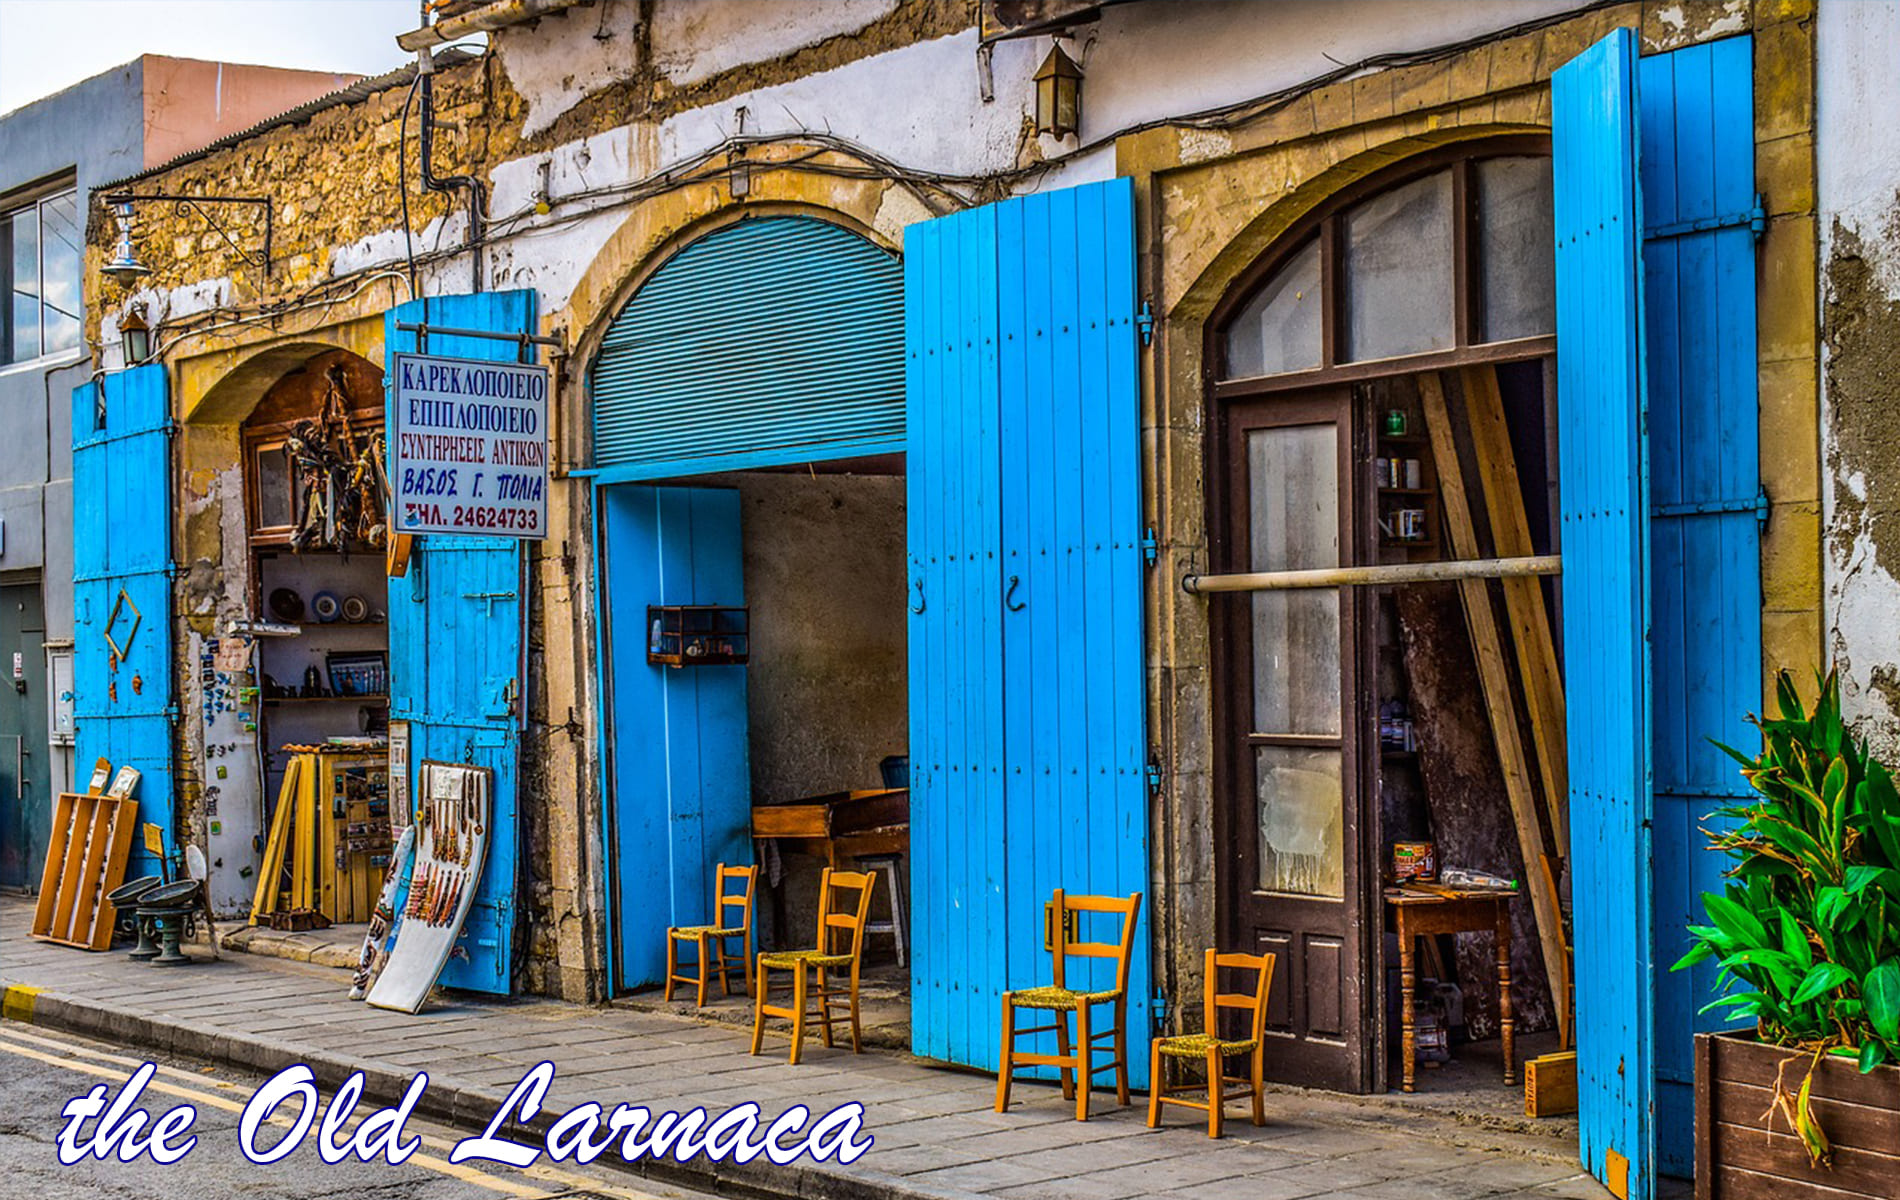 Larnaca taxi and old Larnaca